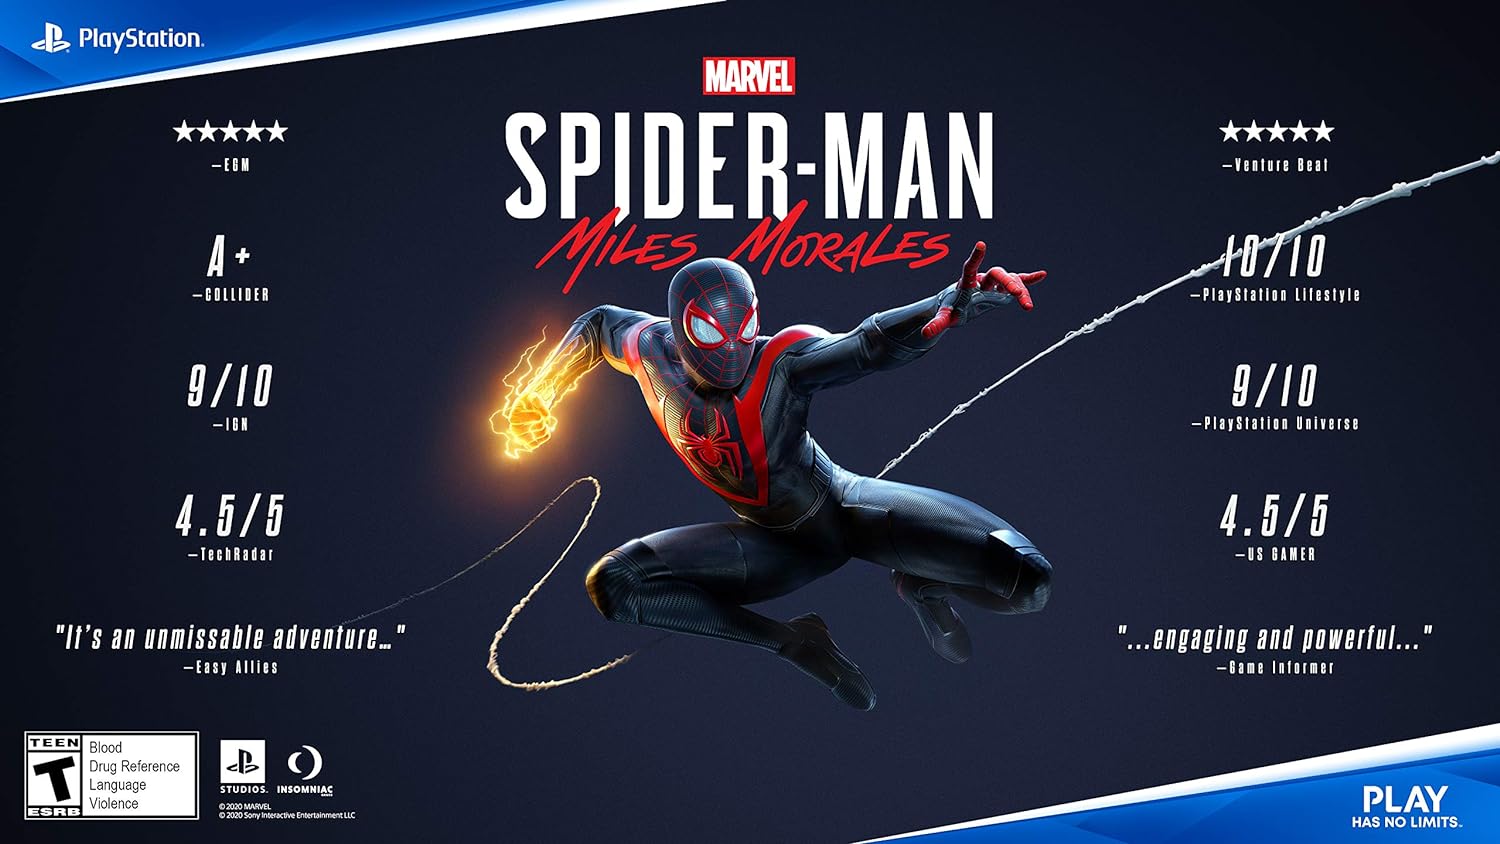 Ps4-Marvel-Spider-Man-tech-junction-storeg.jpg